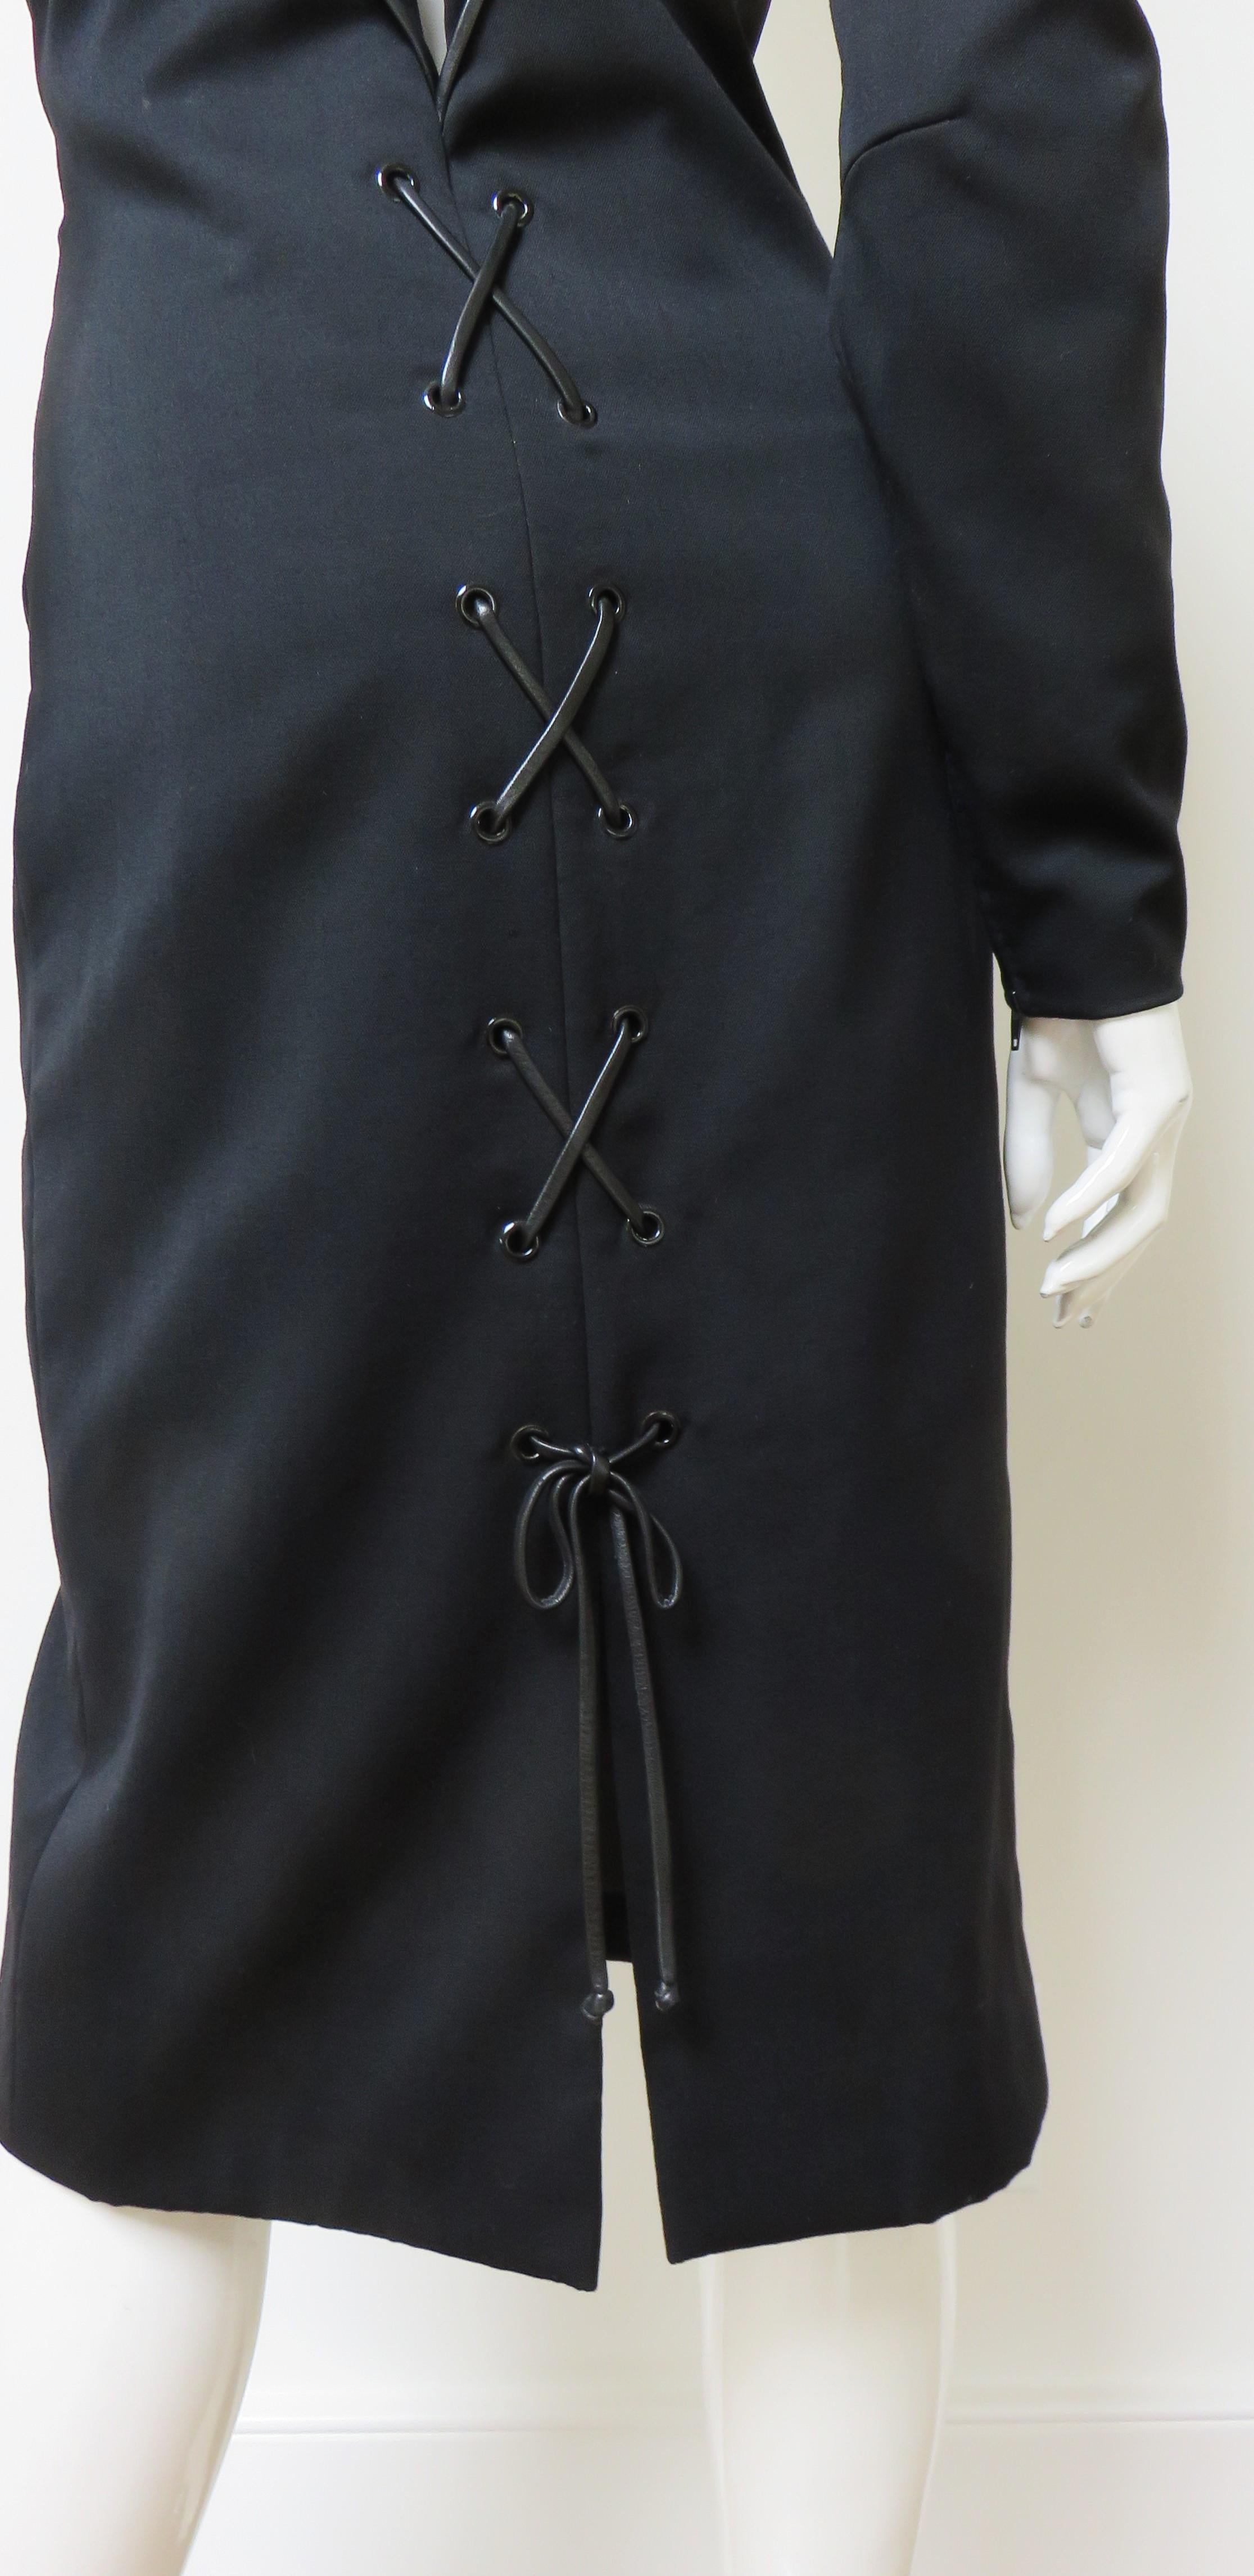 Guy Laroche Silk Lace up Back Dress 1990s For Sale 7